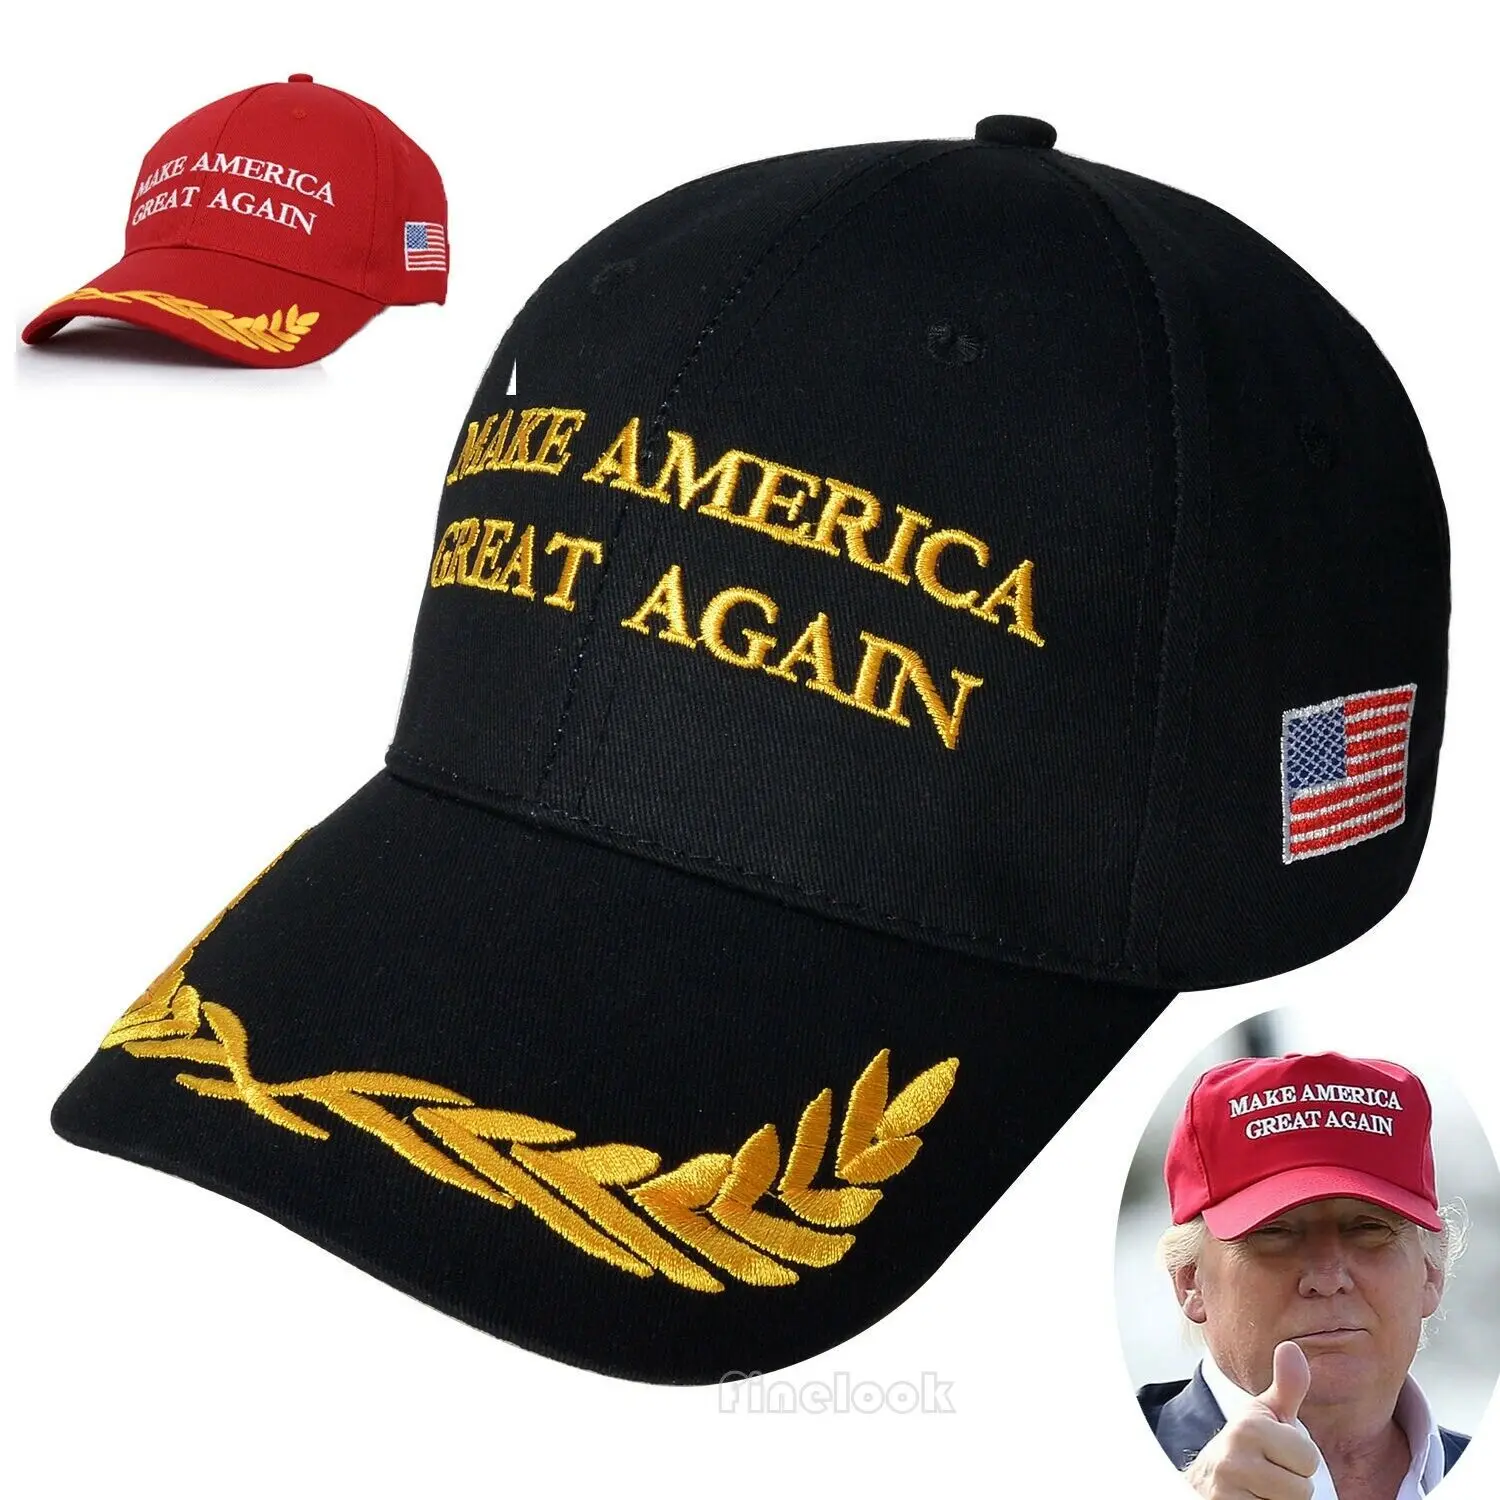 

President Donald Trump Cap Make America Great Again Hat Republican Men Women Adjustable Cap Casual Red Hot Baseball Caps Hot